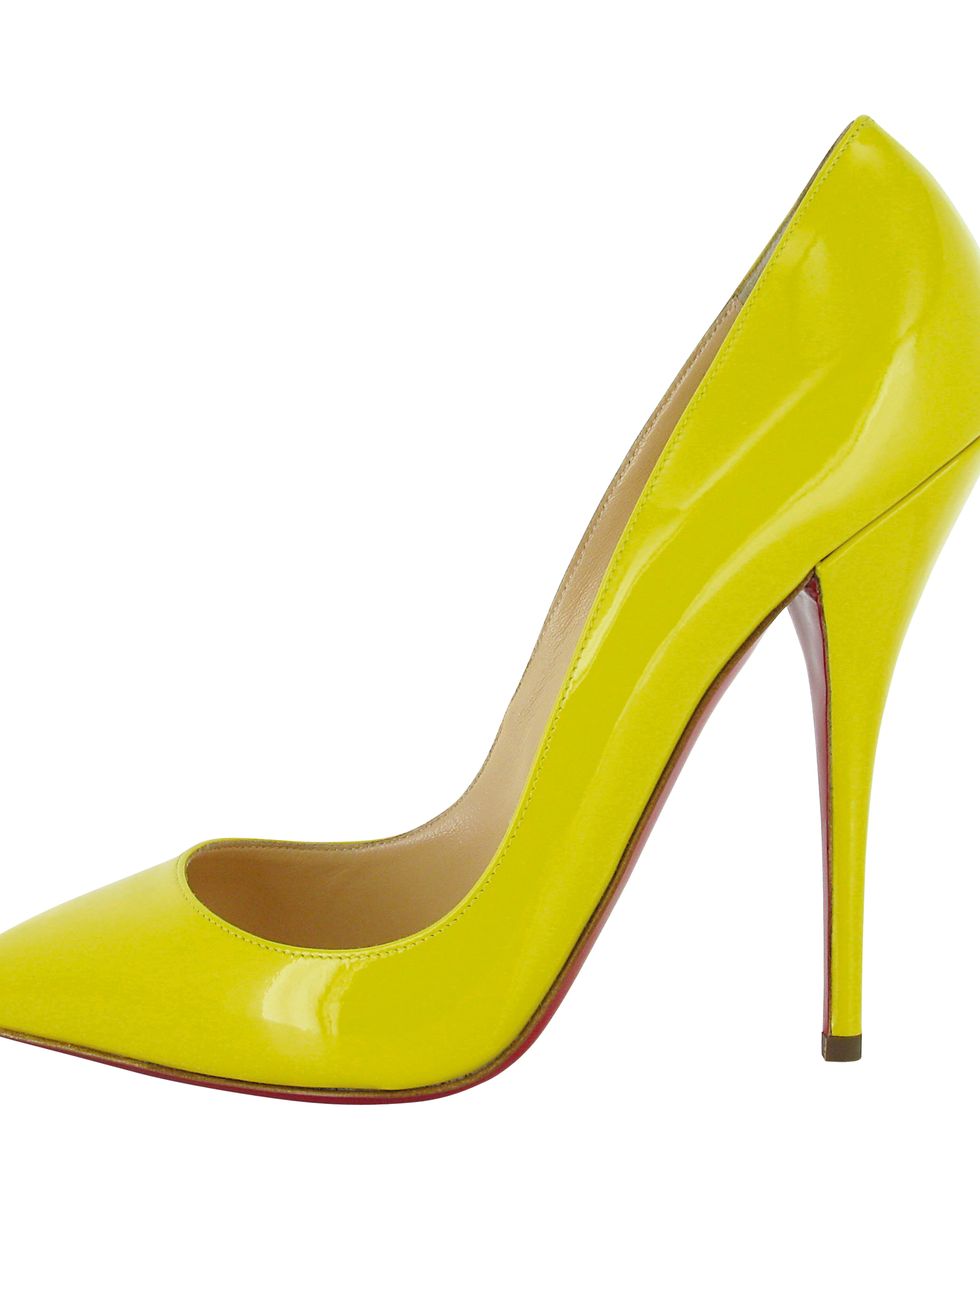 Footwear, Brown, Yellow, High heels, Tan, Black, Beige, Basic pump, Fashion design, Court shoe, 